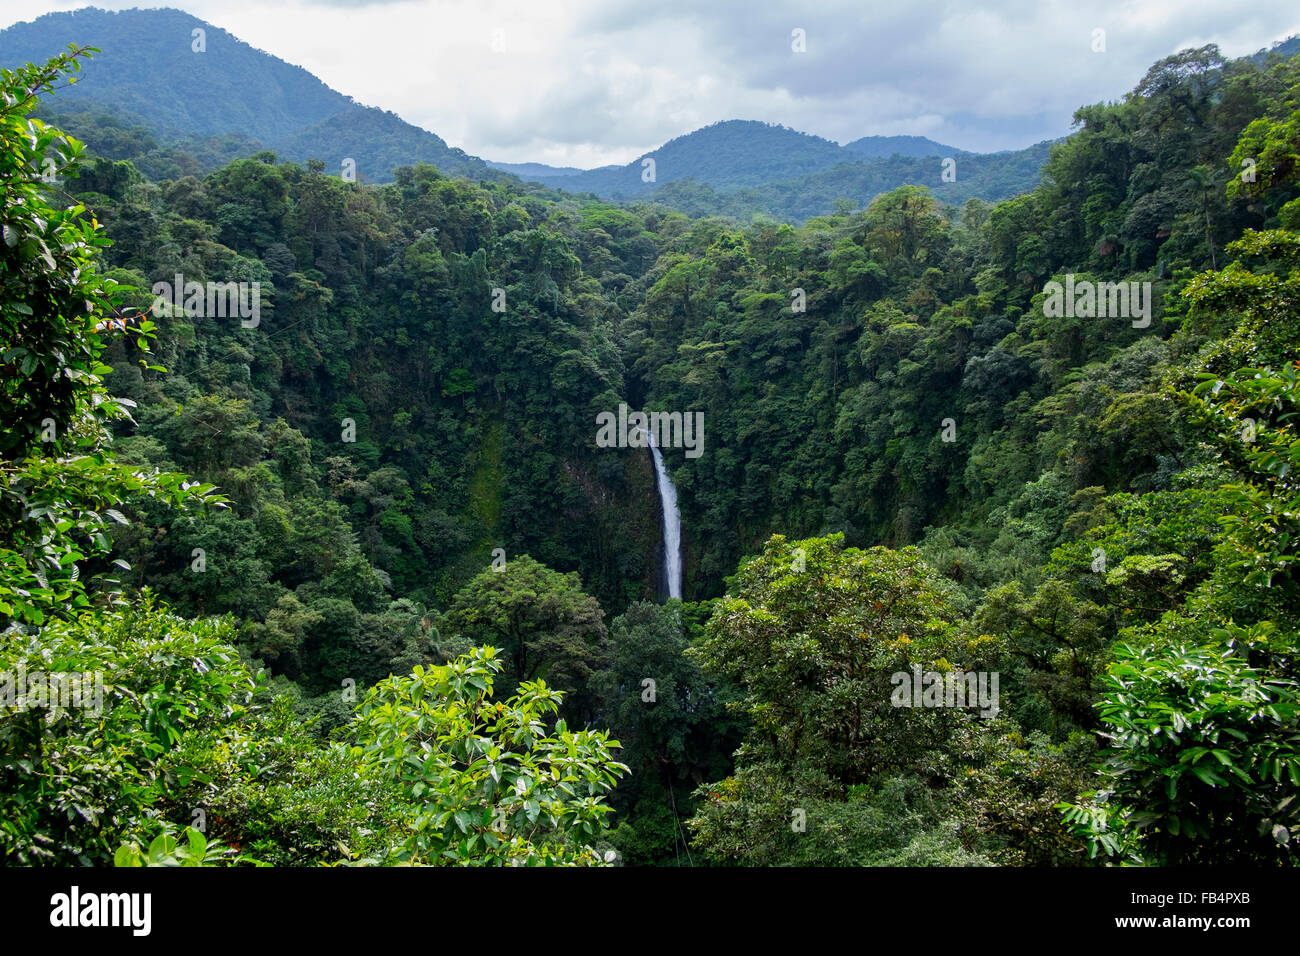 La Catarata de La Fortuna, cerca de la ciudad de La Fortuna, Costa Rica. Foto de stock